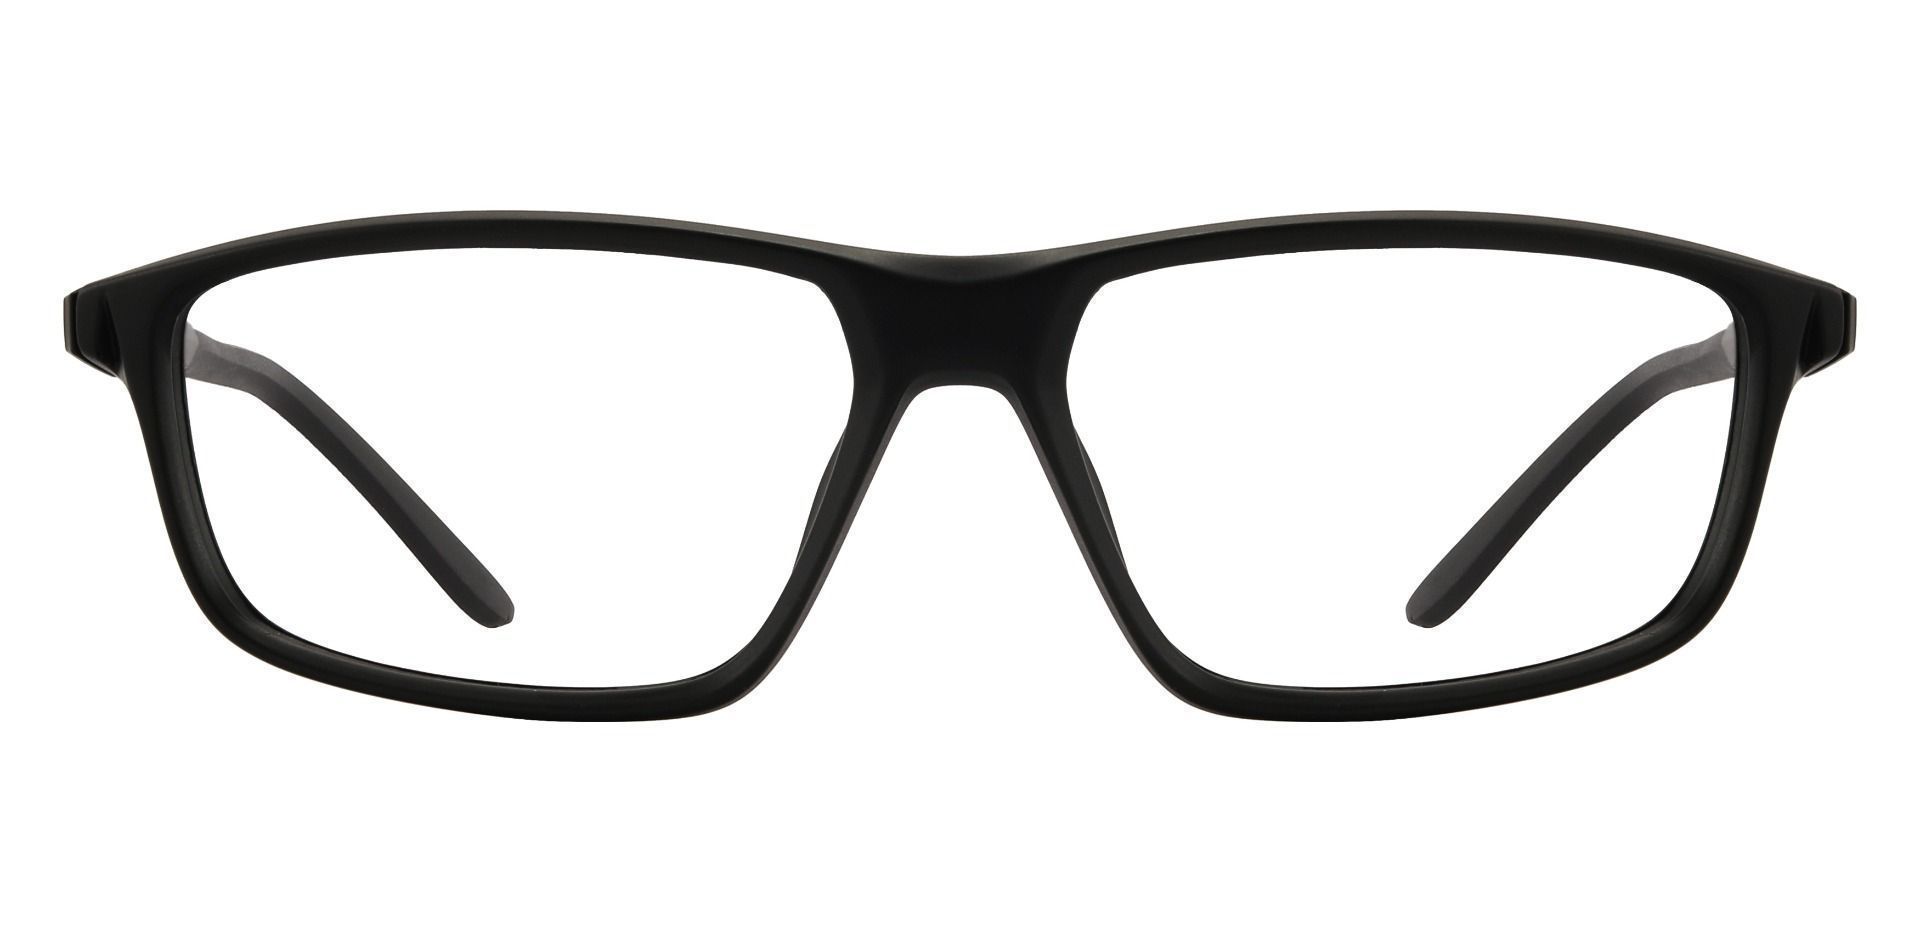 Mark Rectangle Prescription Glasses - Black